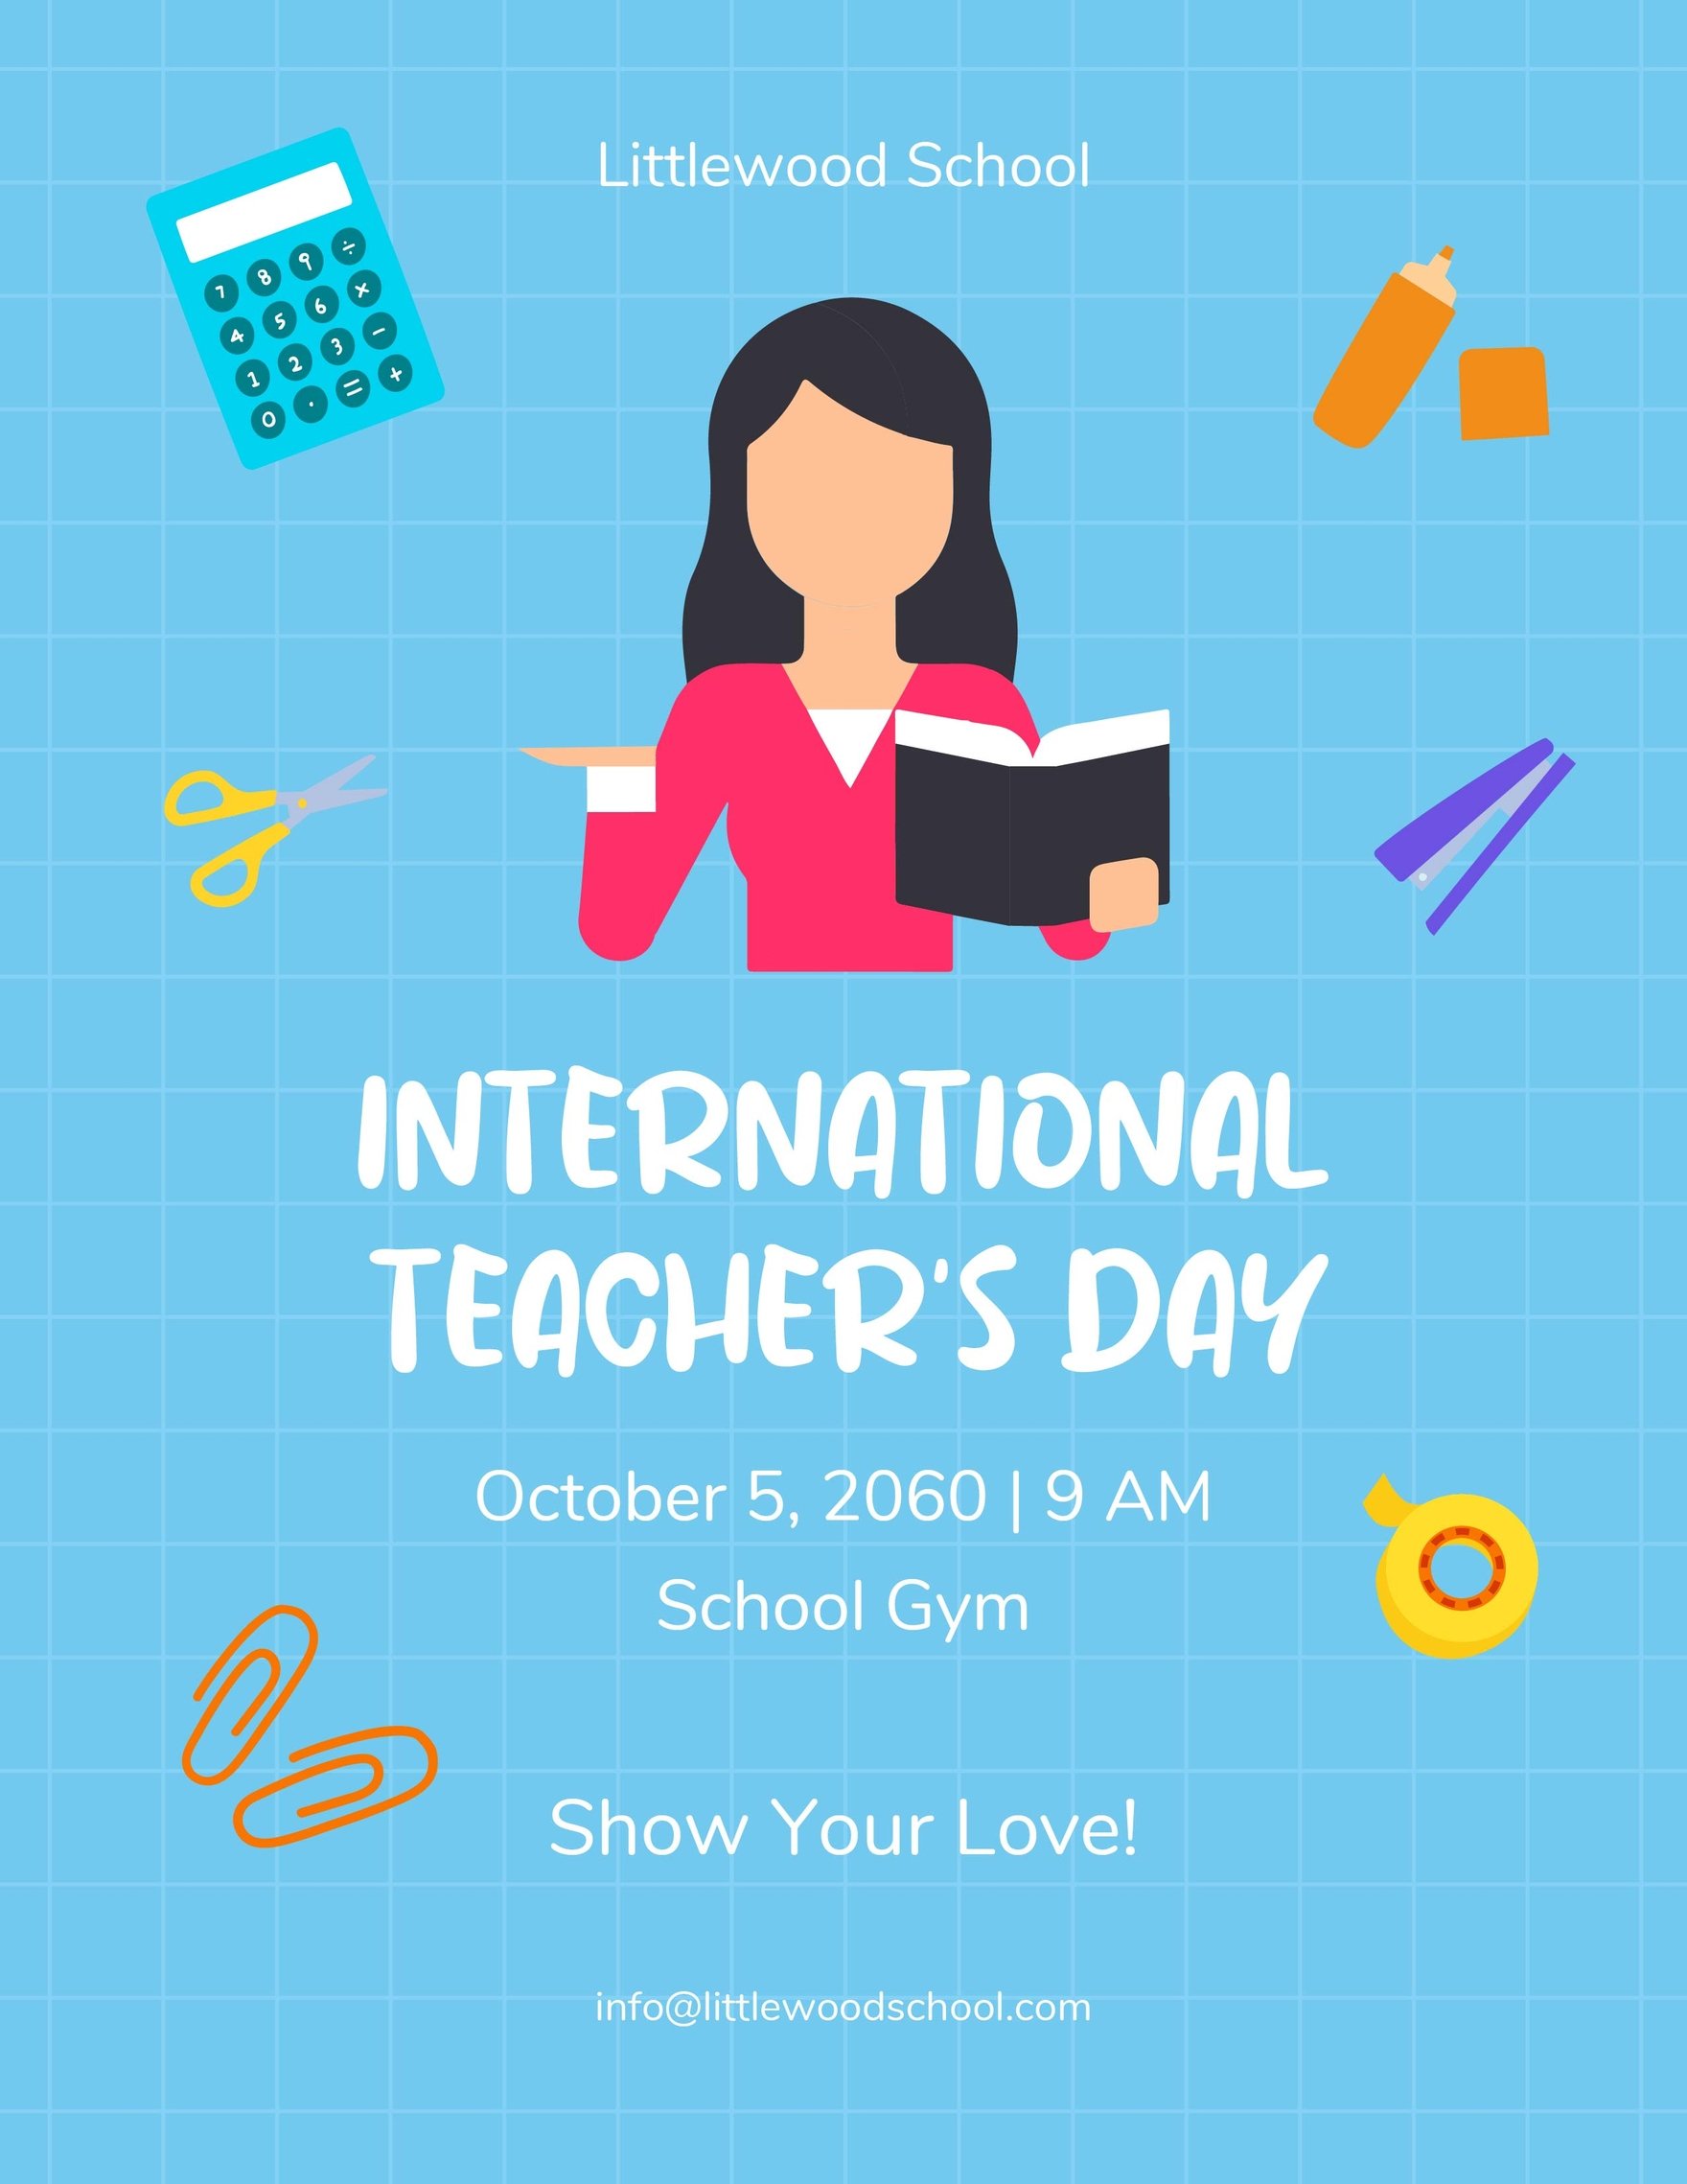 International Teacher's Day Flyer in Word, Google Docs, Illustrator, PSD, Apple Pages, EPS, SVG, JPG, PNG